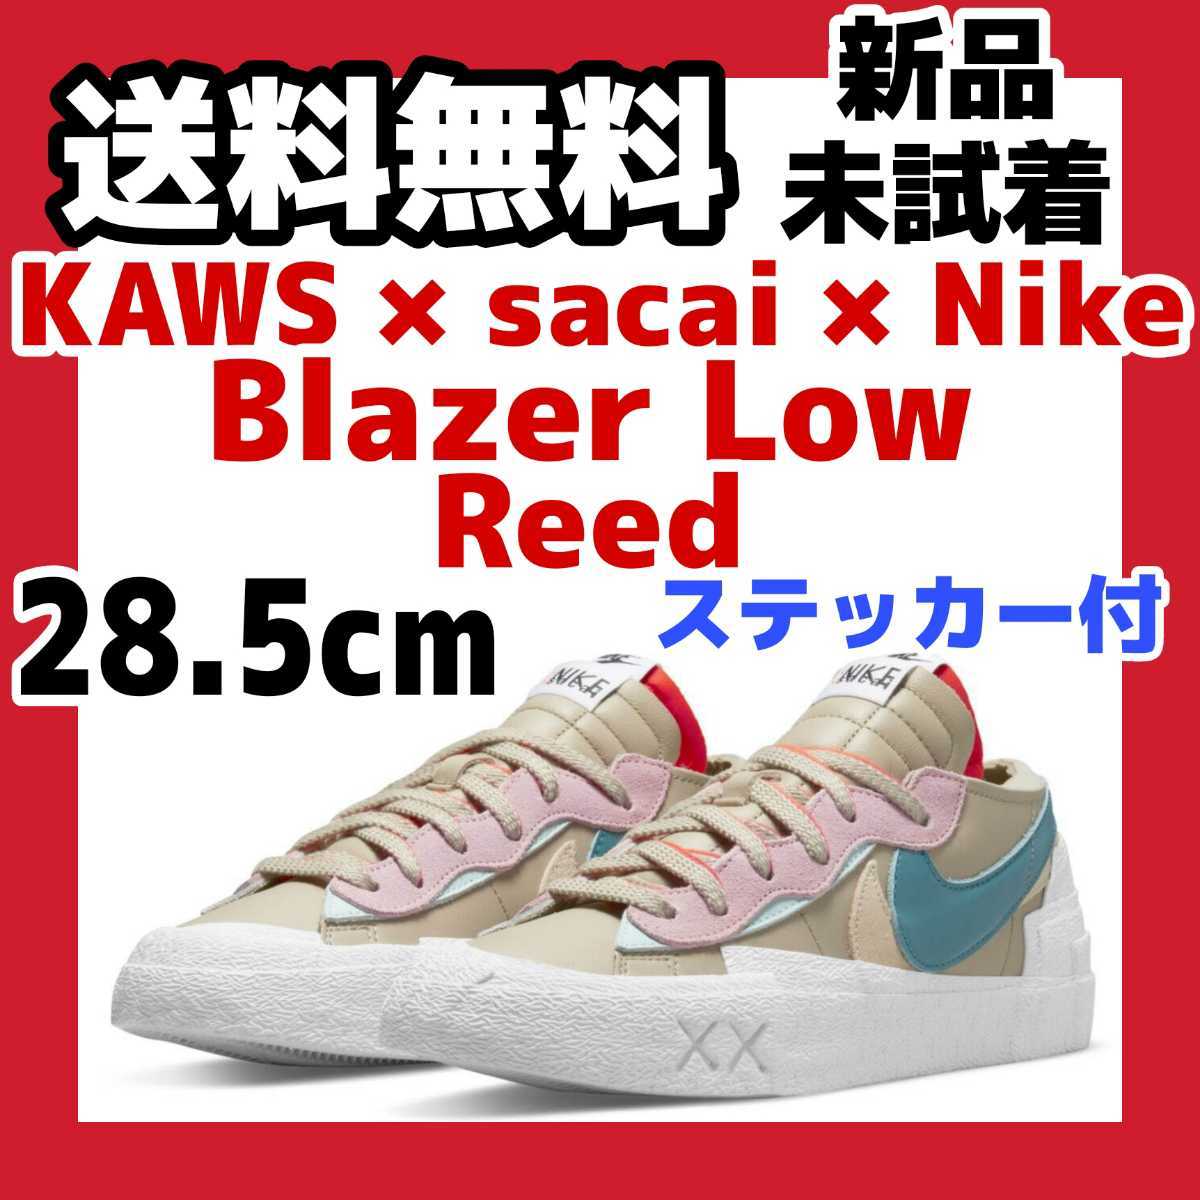 28 5cm KAWS × sacai × Nike Blazer Low Reedカウズ × サカイ × ナイキ